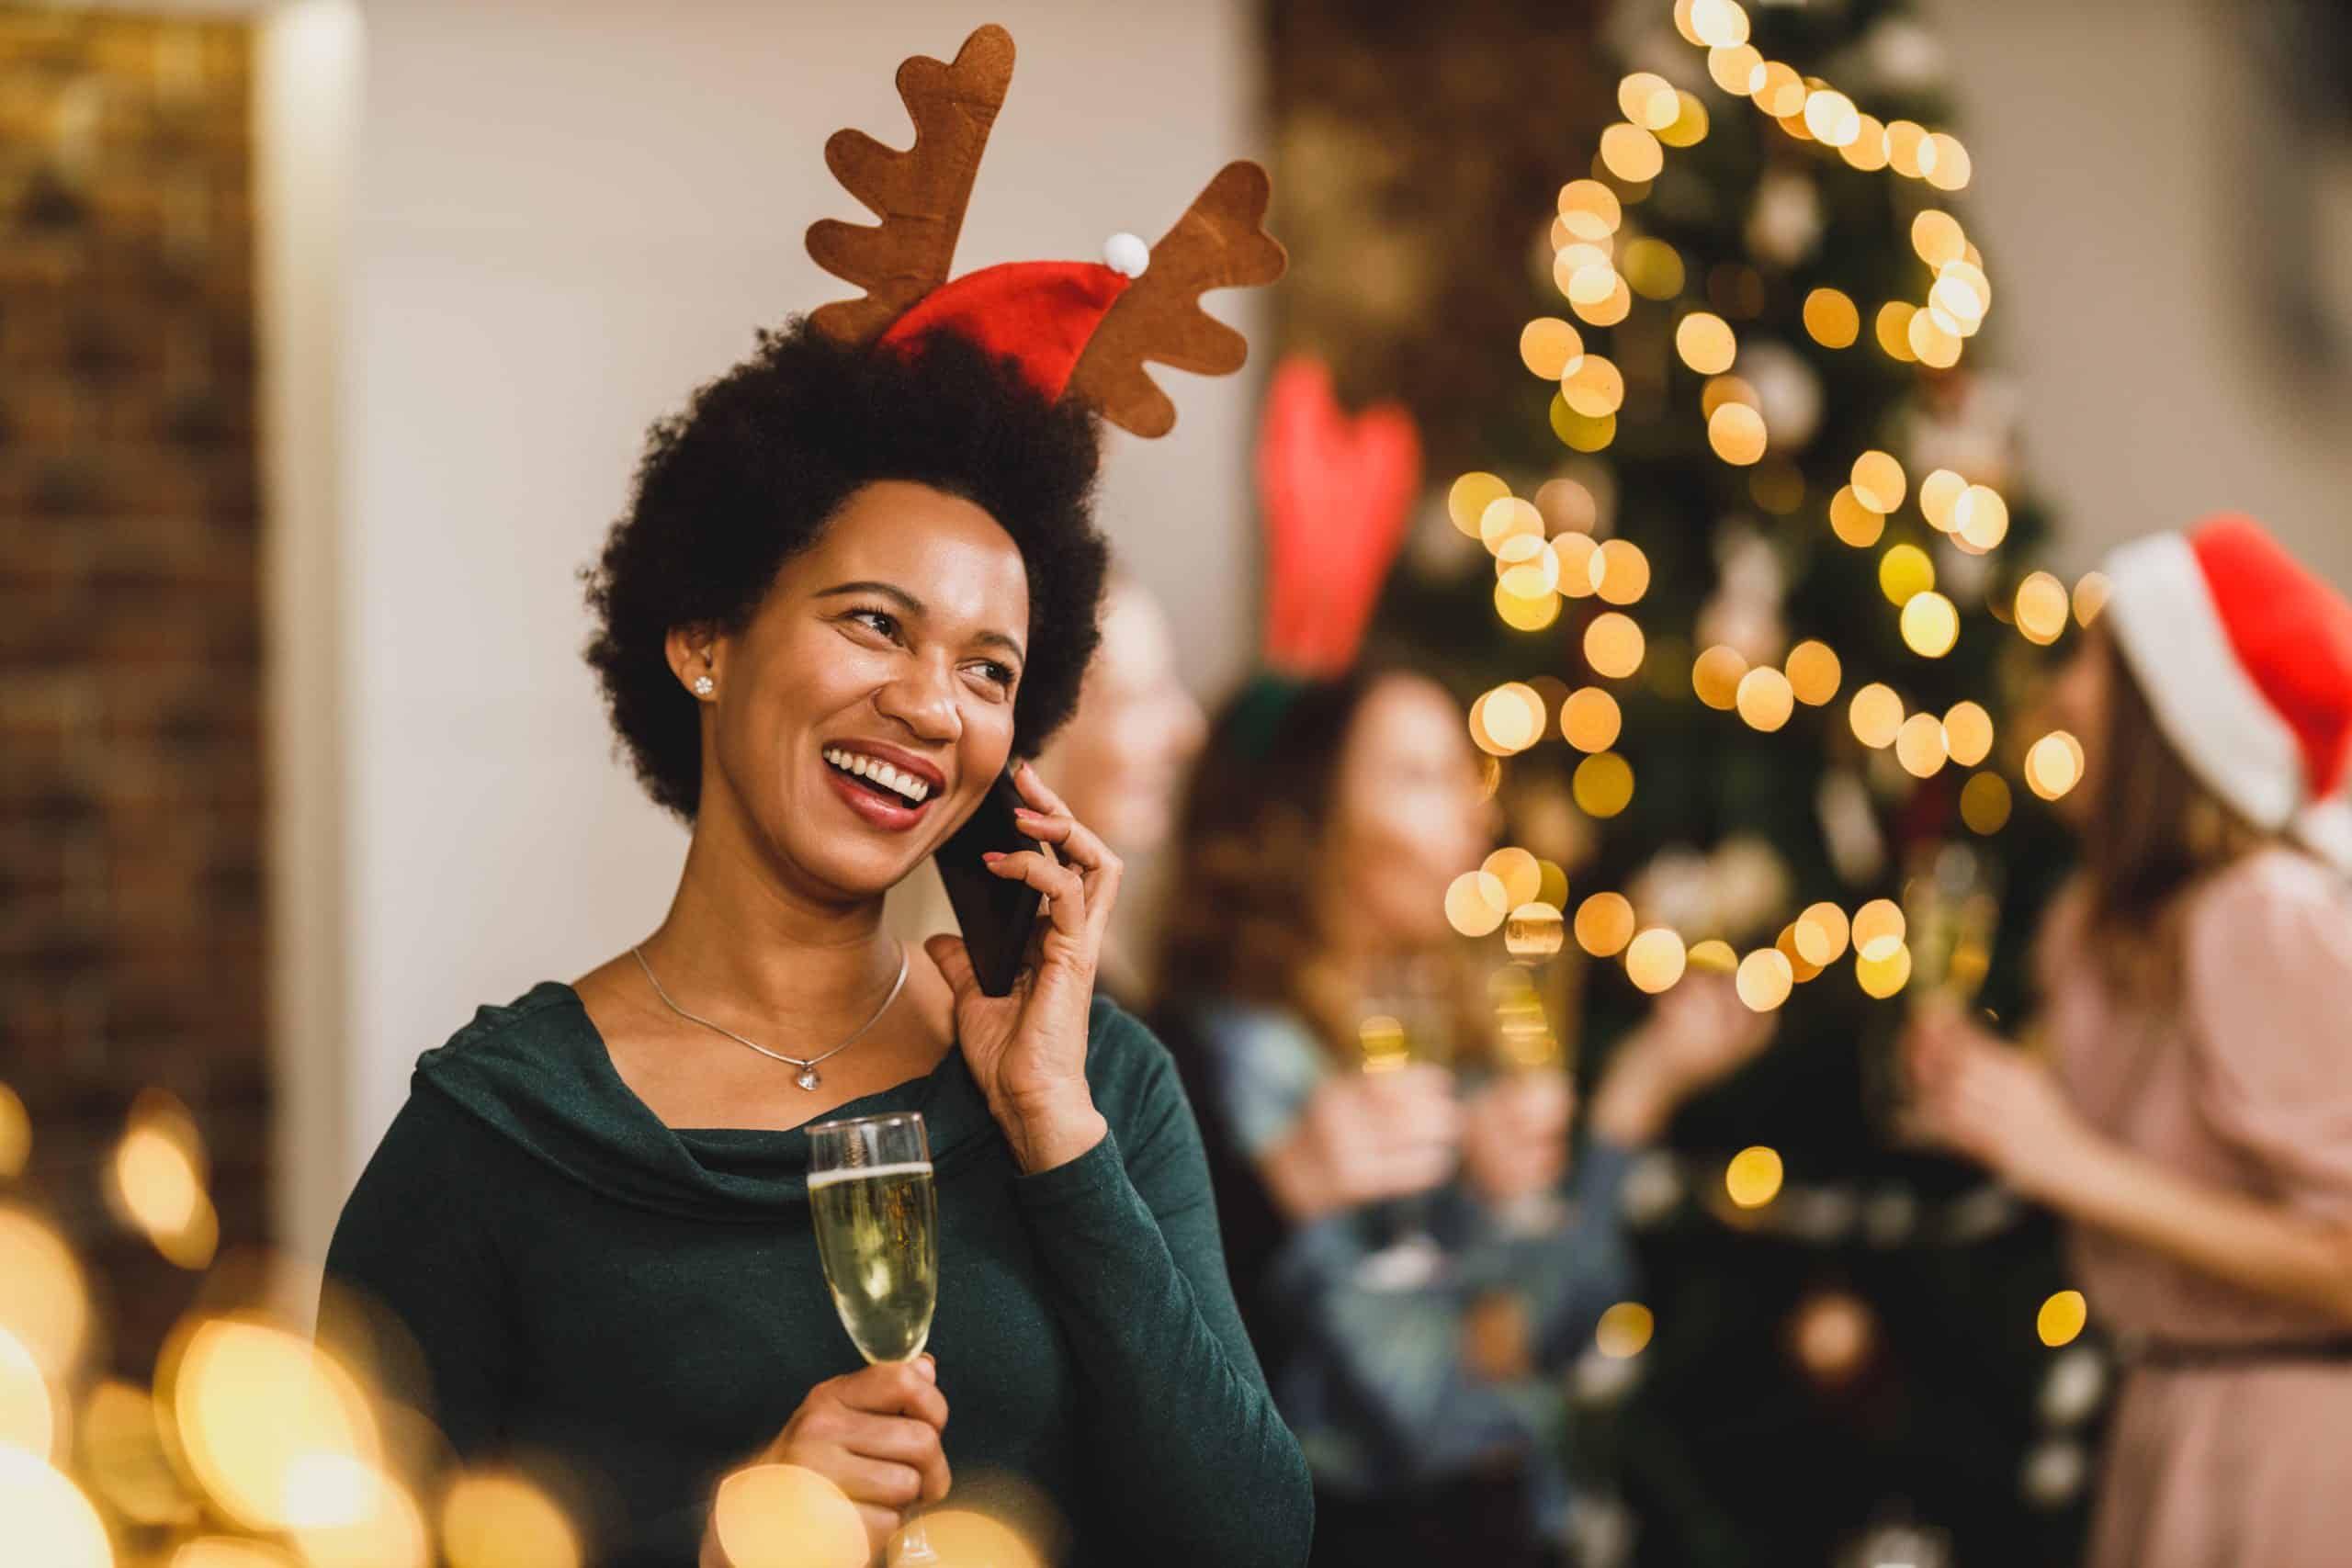 woman enjoying holiday festivities drinking alcohol, holiday drinking at party